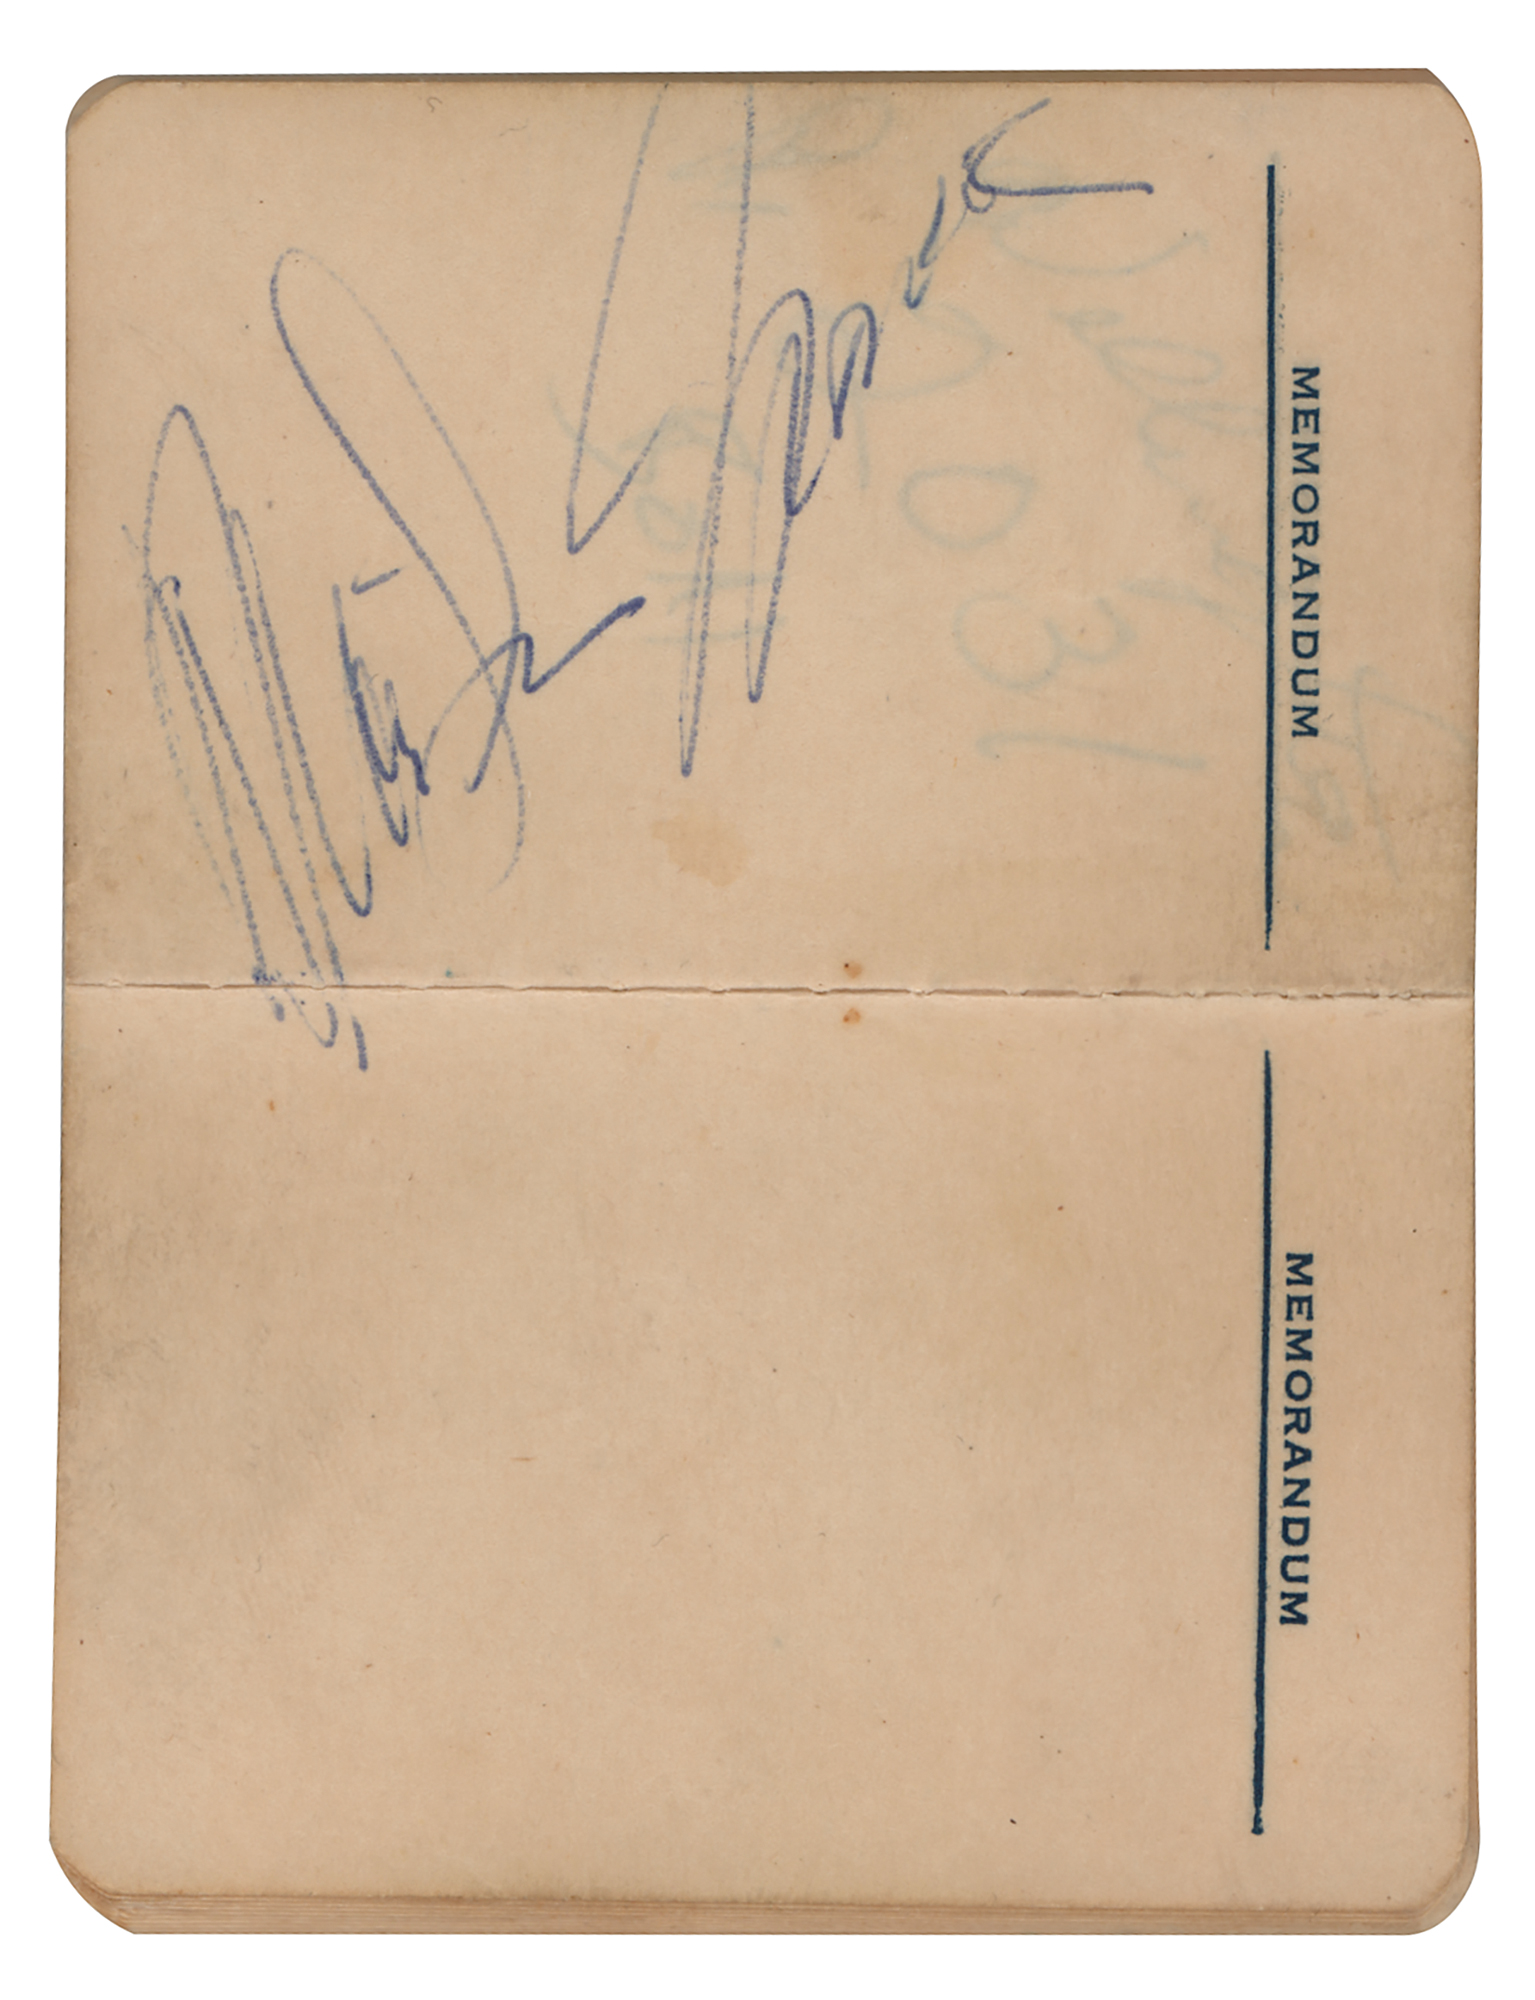 Marilyn Monroe Signature | RR Auction